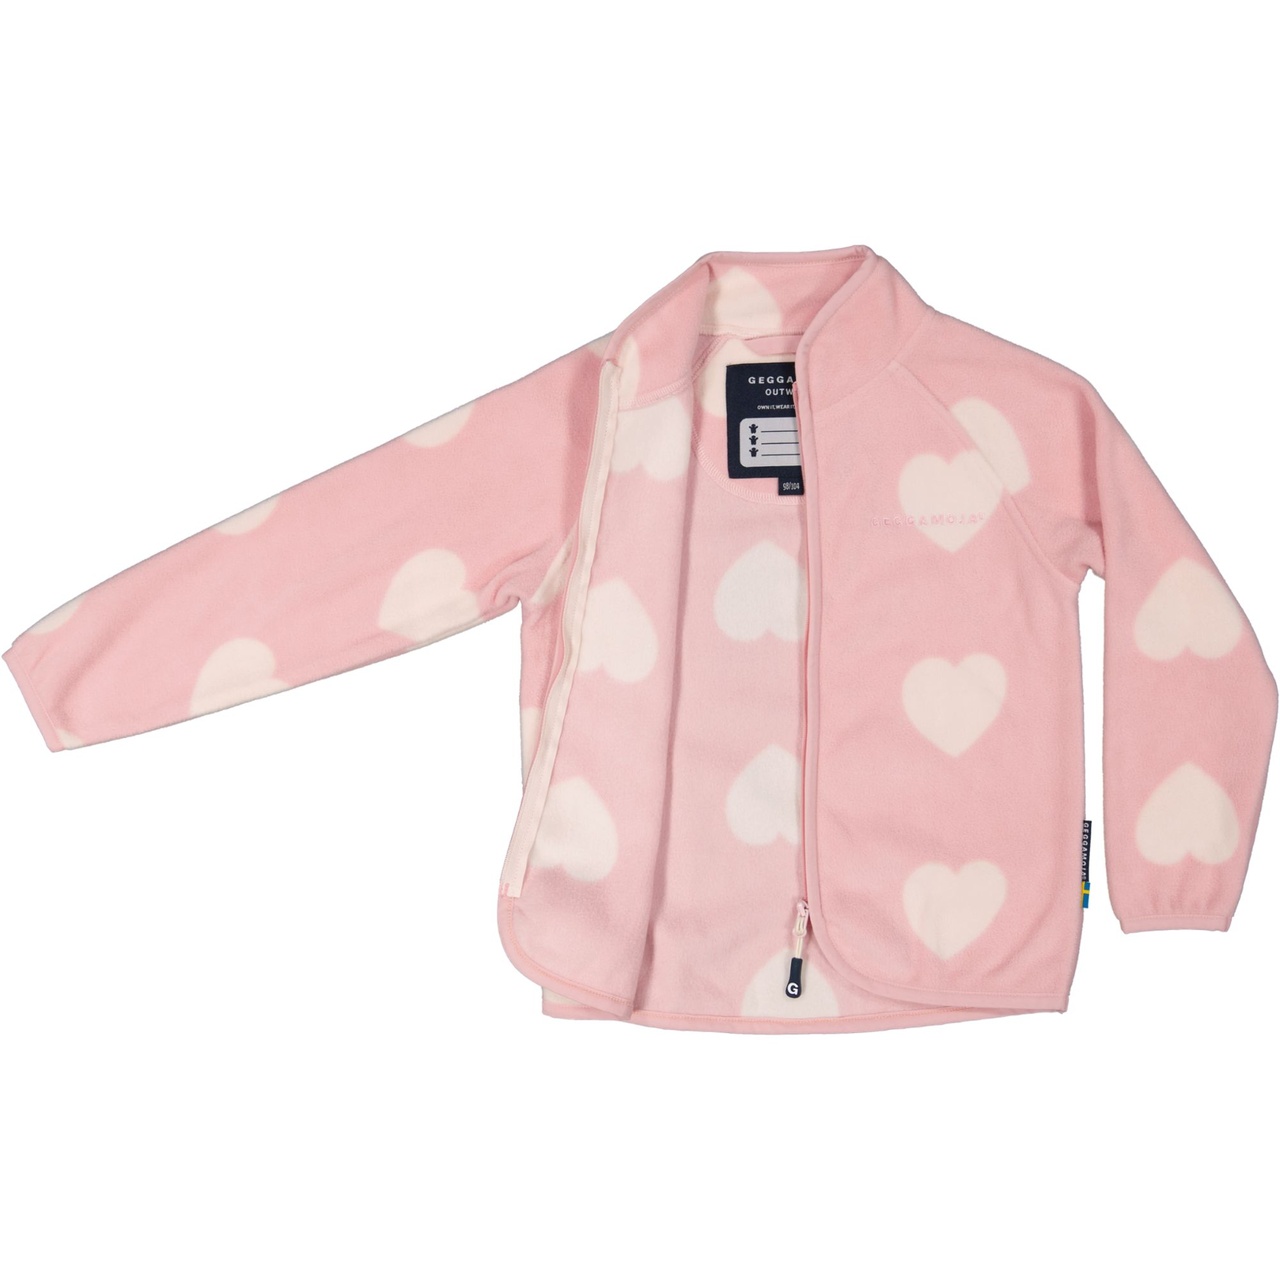 Single fleece set Pink Heart 134/140